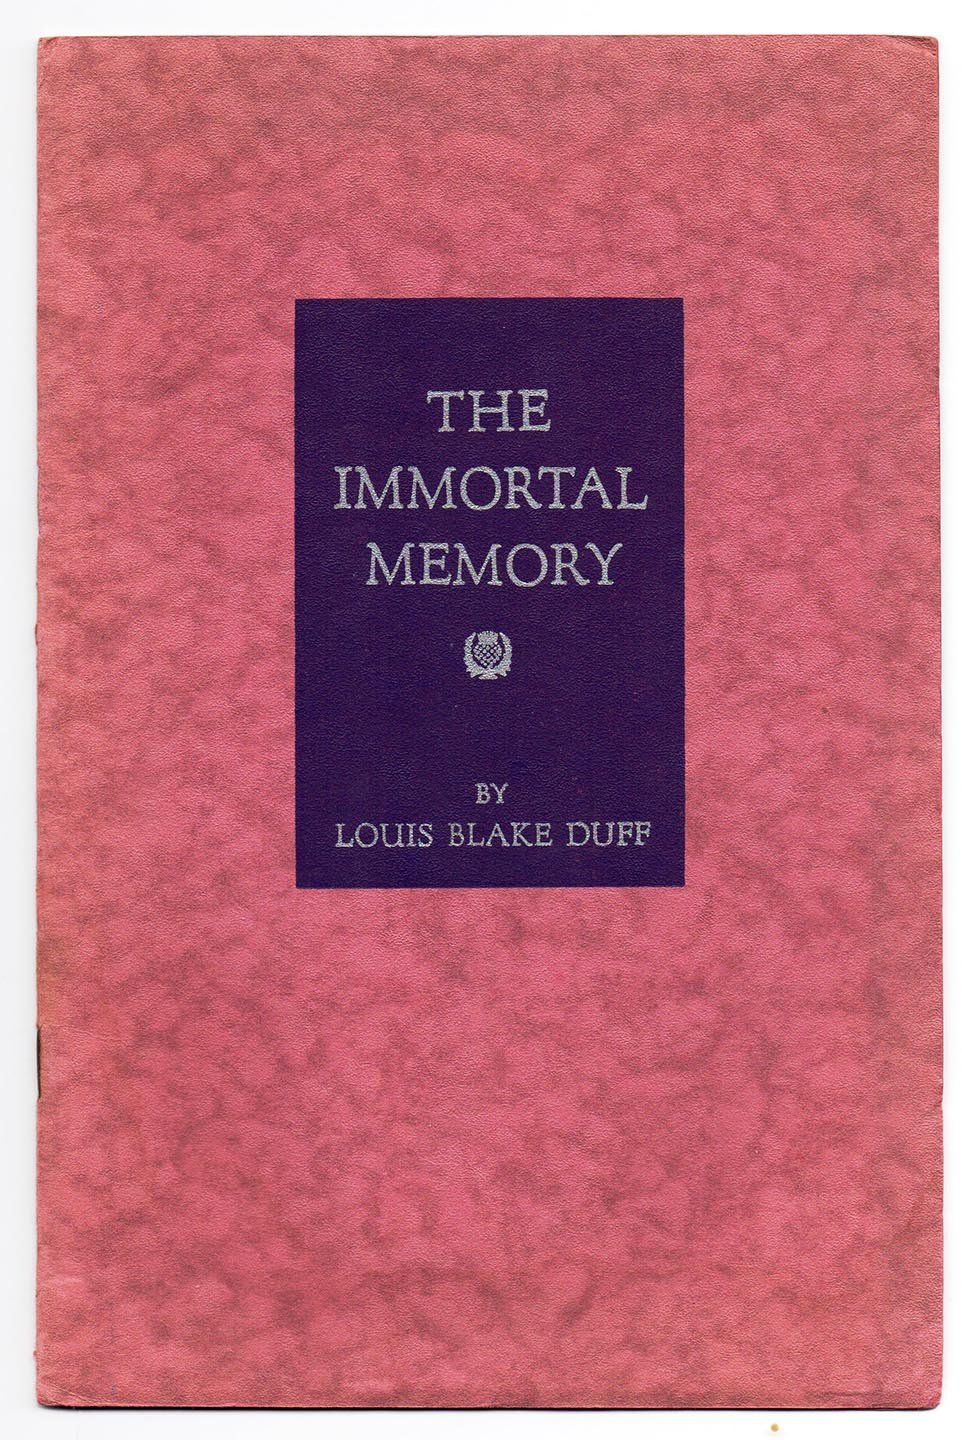 The Immortal Memory: An Address before the Burns Literary Society of Toronto, January 25, 1944